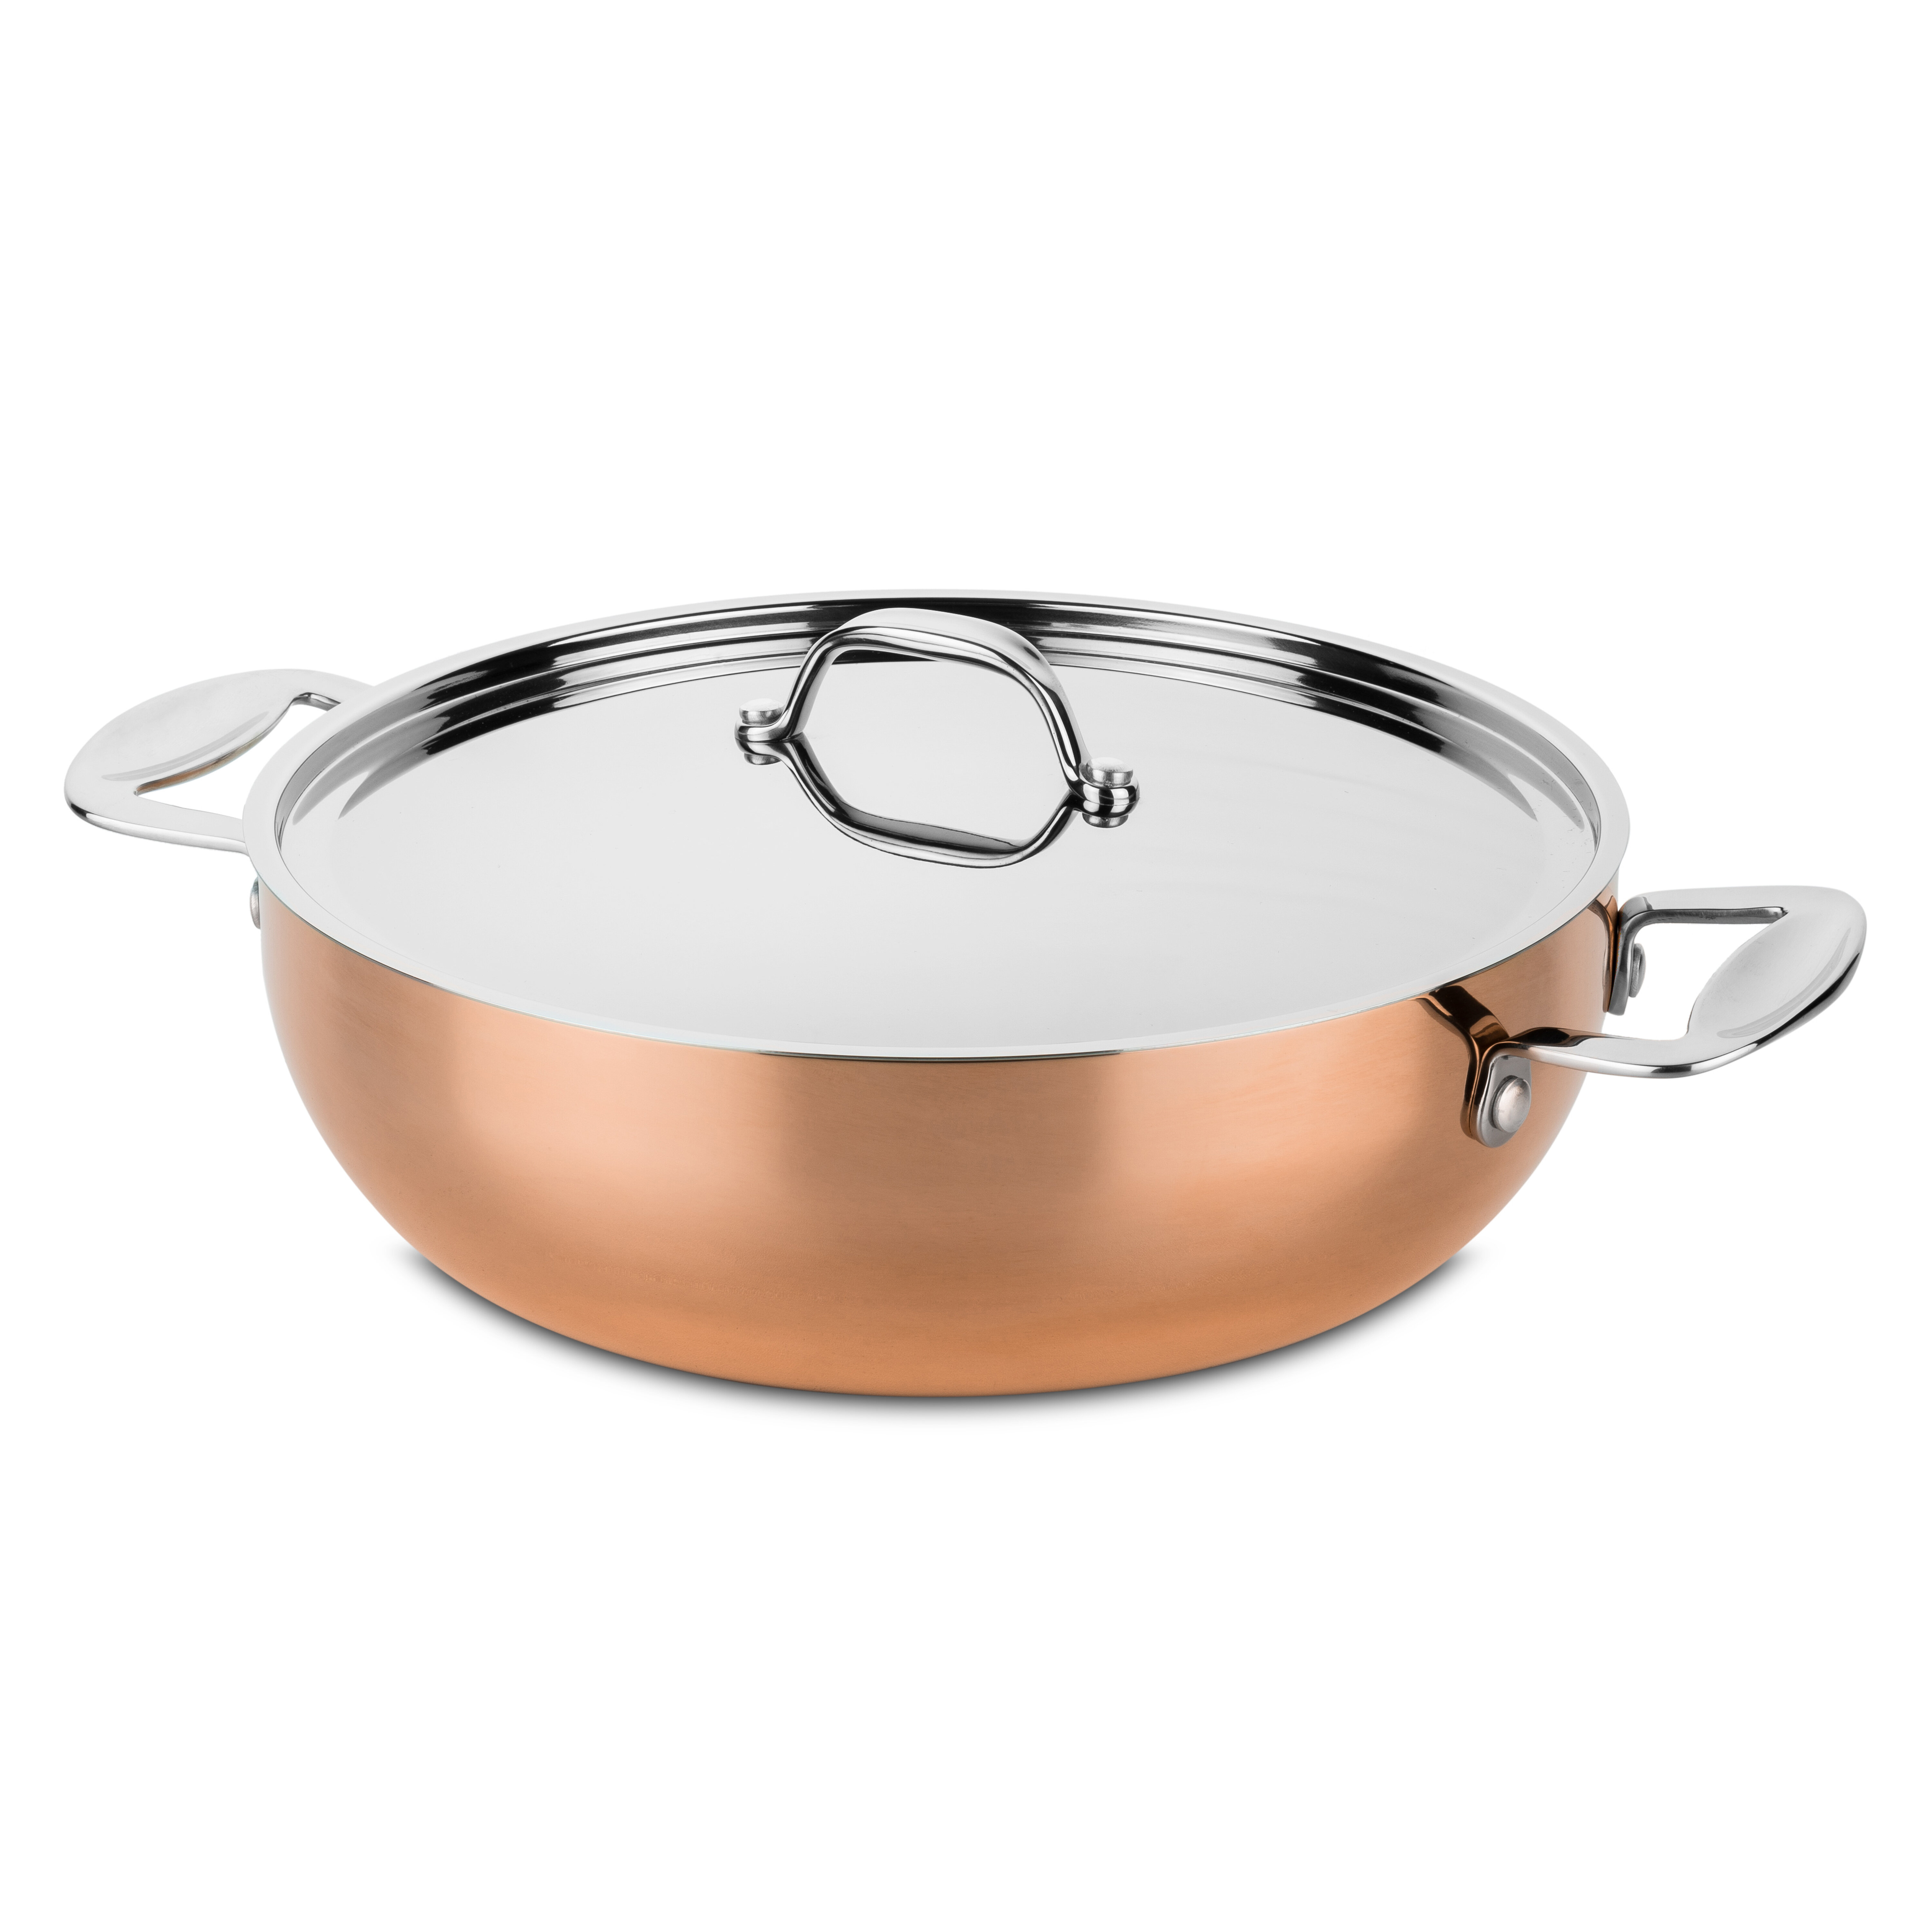 paella pan with lid uk